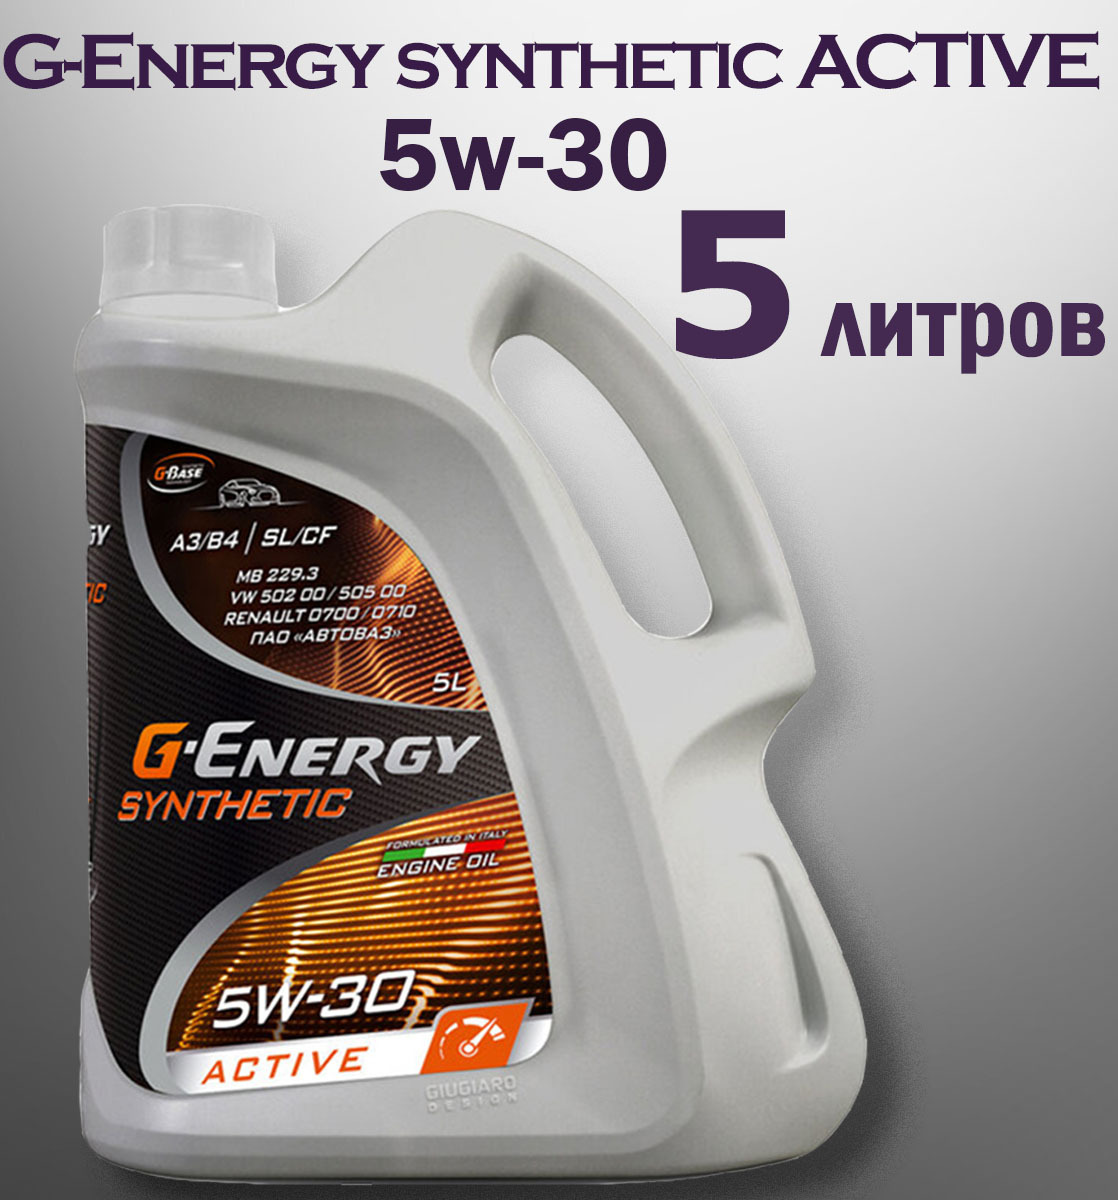 Масло energy 5 40. Масло g-Energy Syntetic Activ 5w30. G-Energy Synthetic Active 5w-30. G Energy 5w30 синтетика. Масло g Energy Synthetic Active 5w30.